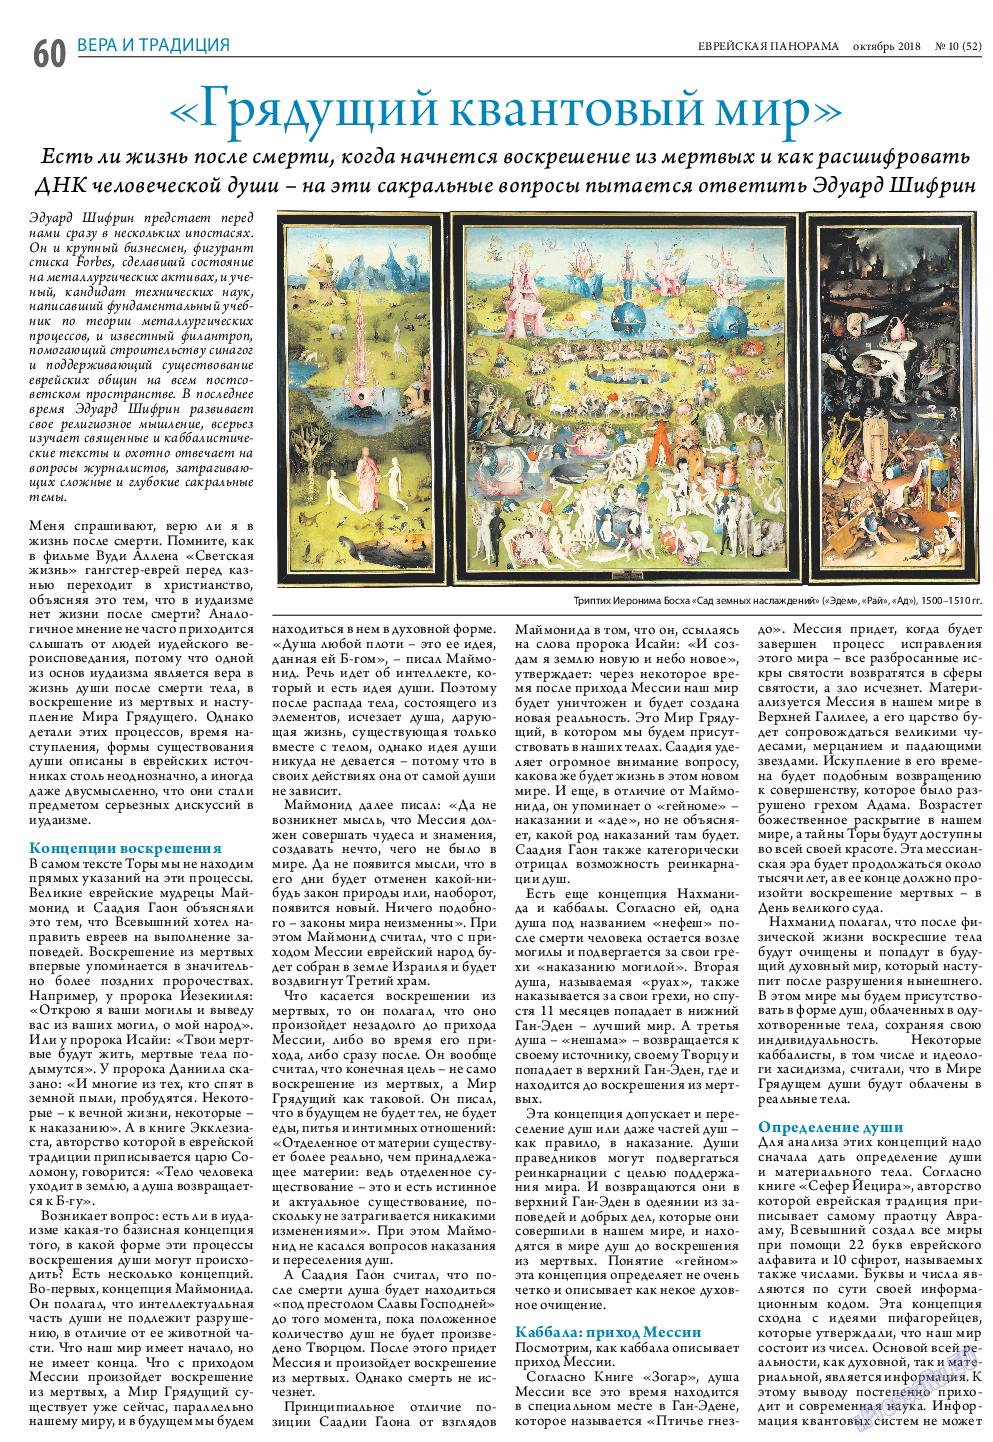 Еврейская панорама, газета. 2018 №10 стр.60